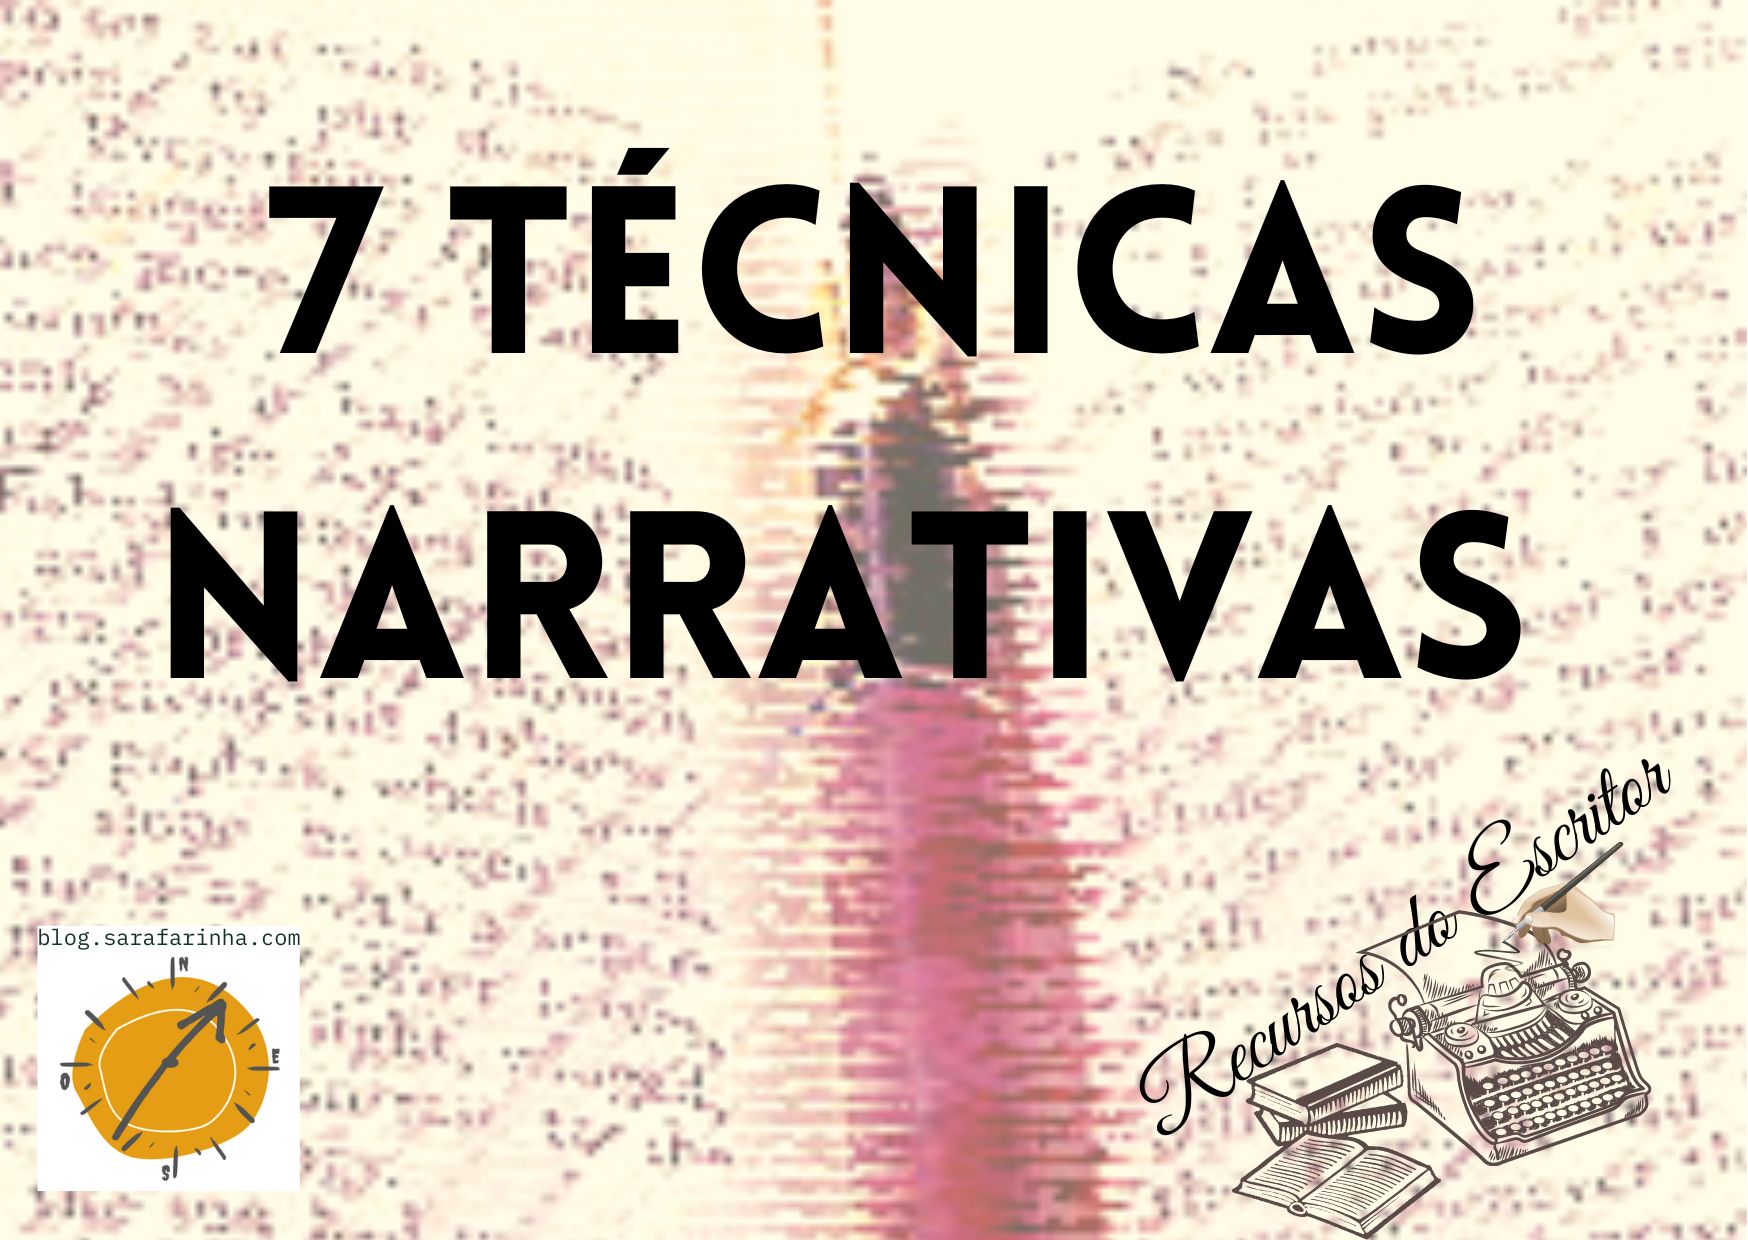 7 técnicas narrativas